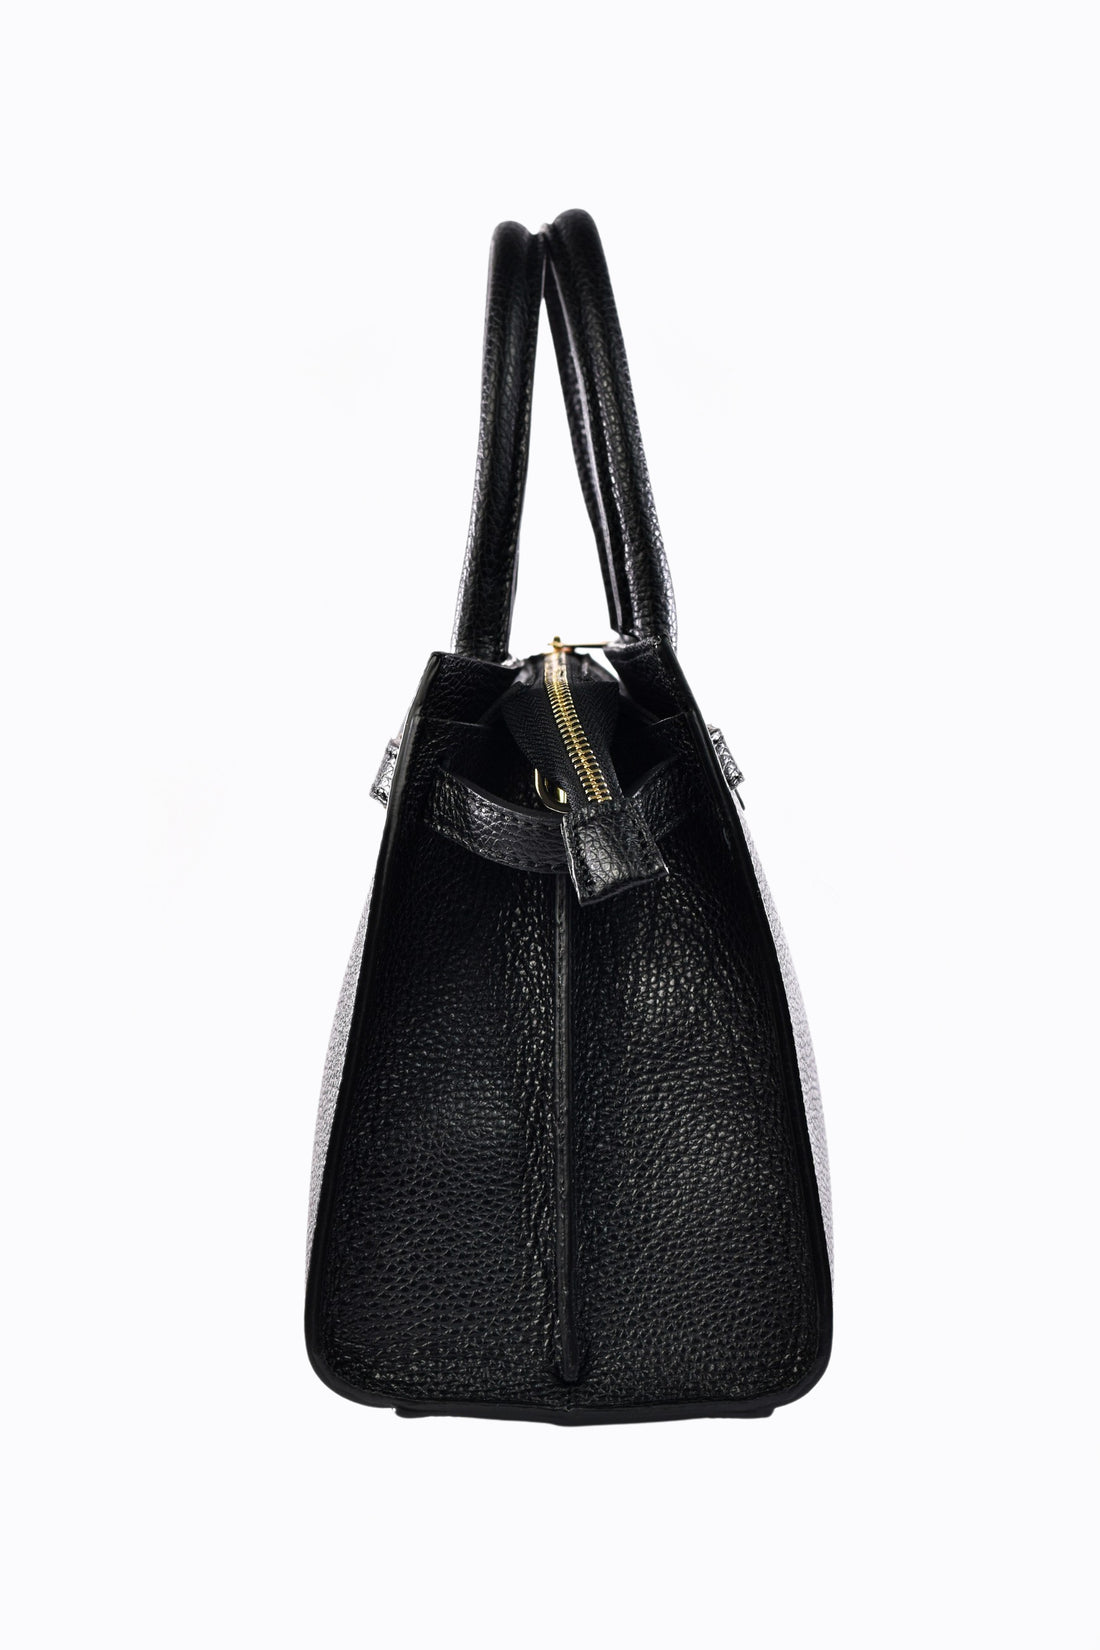 Grace bag in black dollar leather